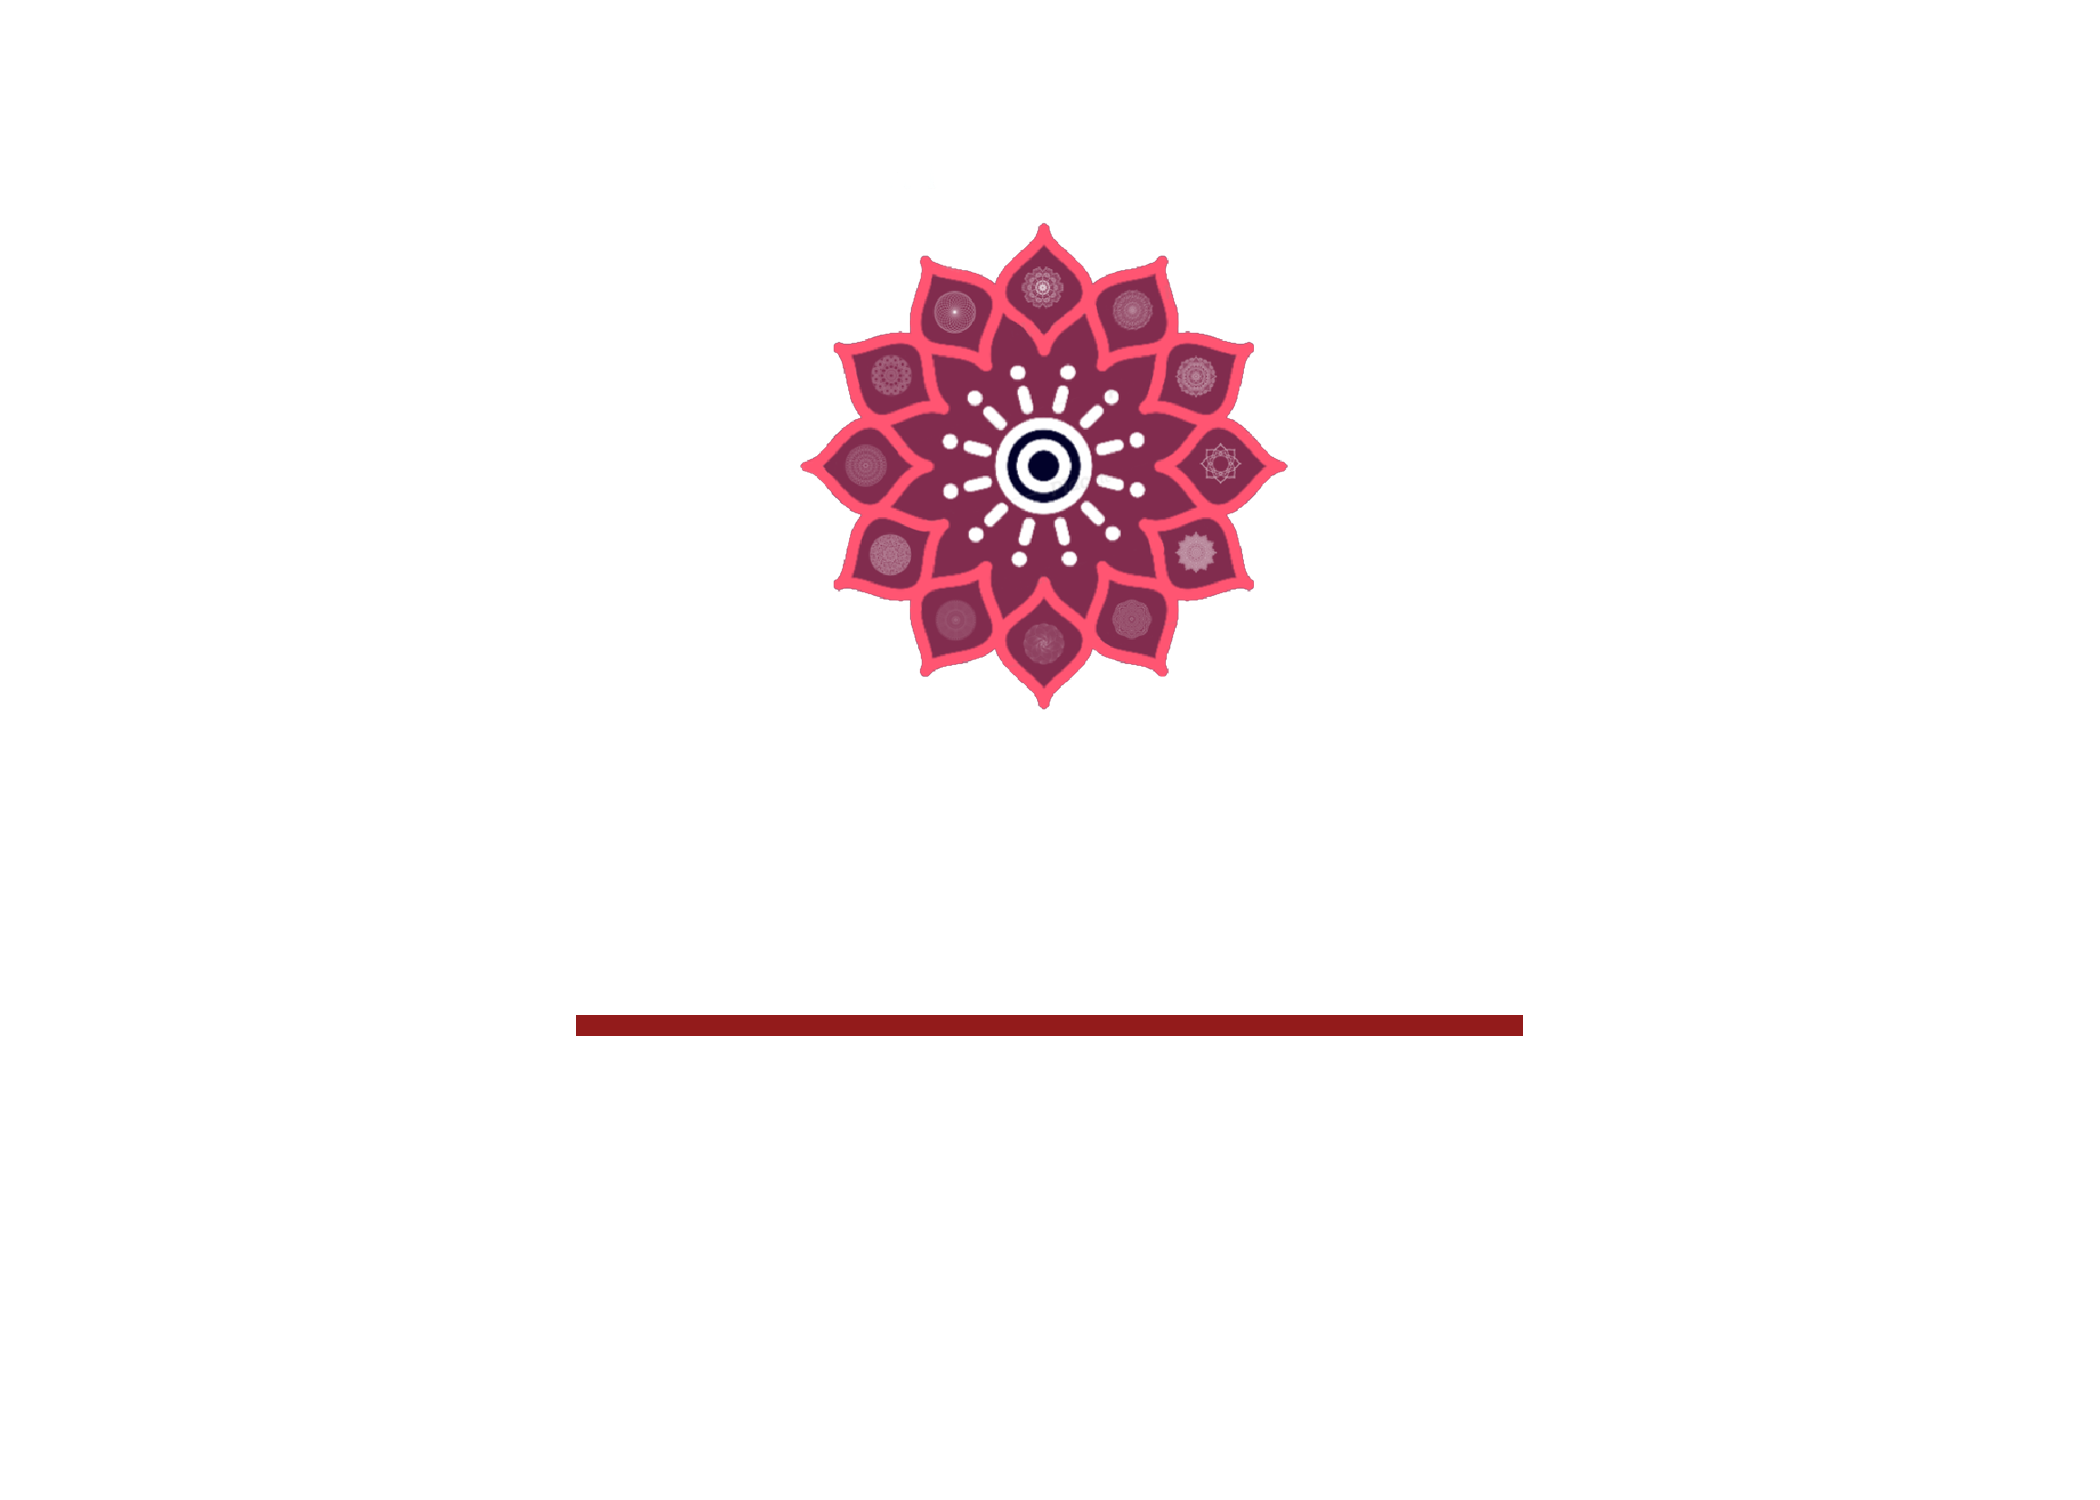 YURI Vidual Designer